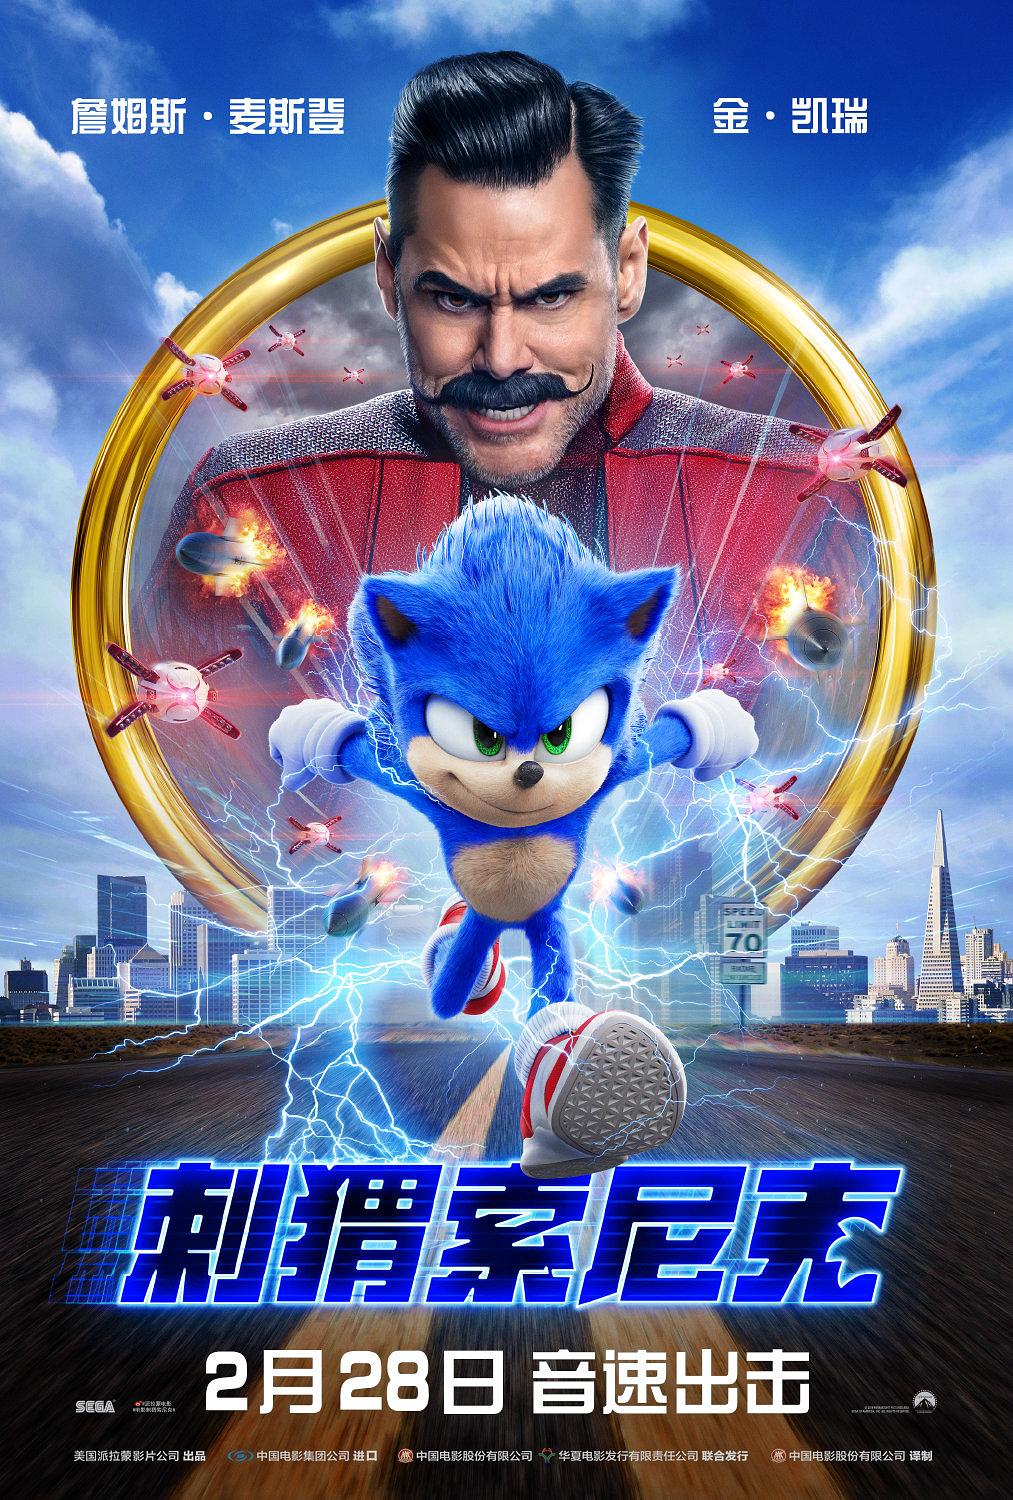 刺猬索尼克/超音鼠大电影 Sonic.the.Hedgehog.2020.1080p.HDRip.x264.AAC2.0-STUTTERSHIT 3.18GB-1.png